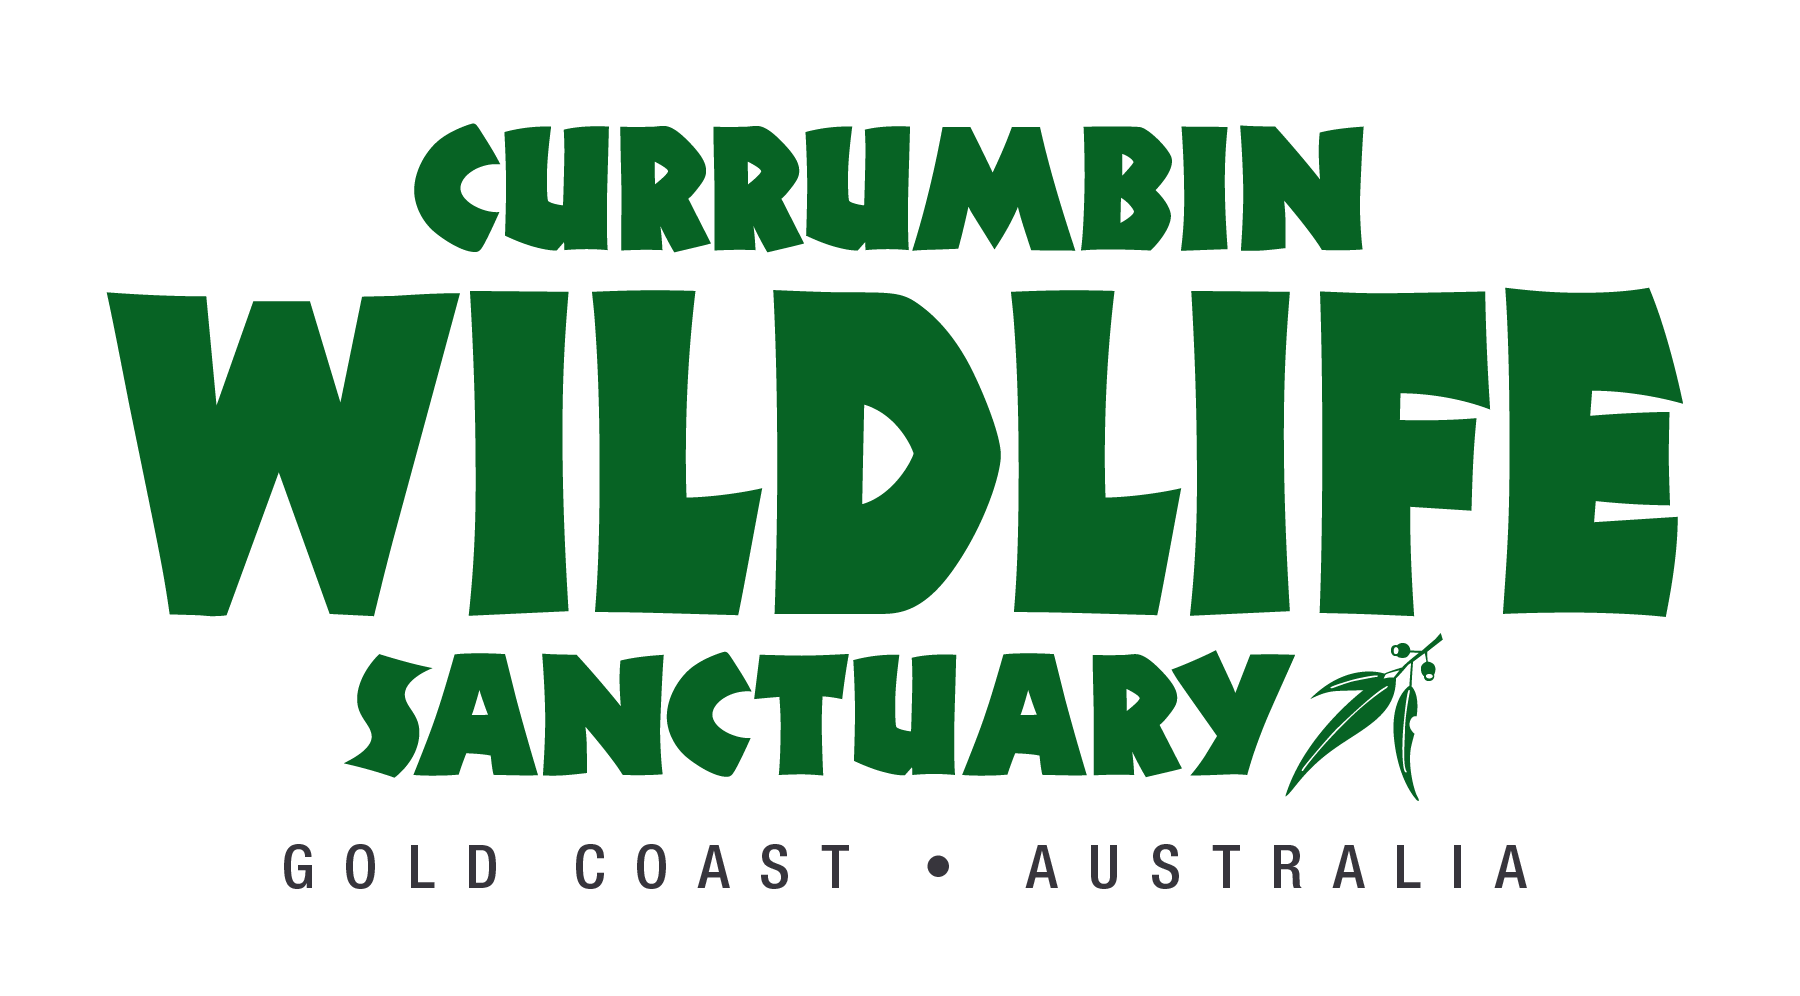 National Trust - Currumbin Wildlife Sanctuary Logo